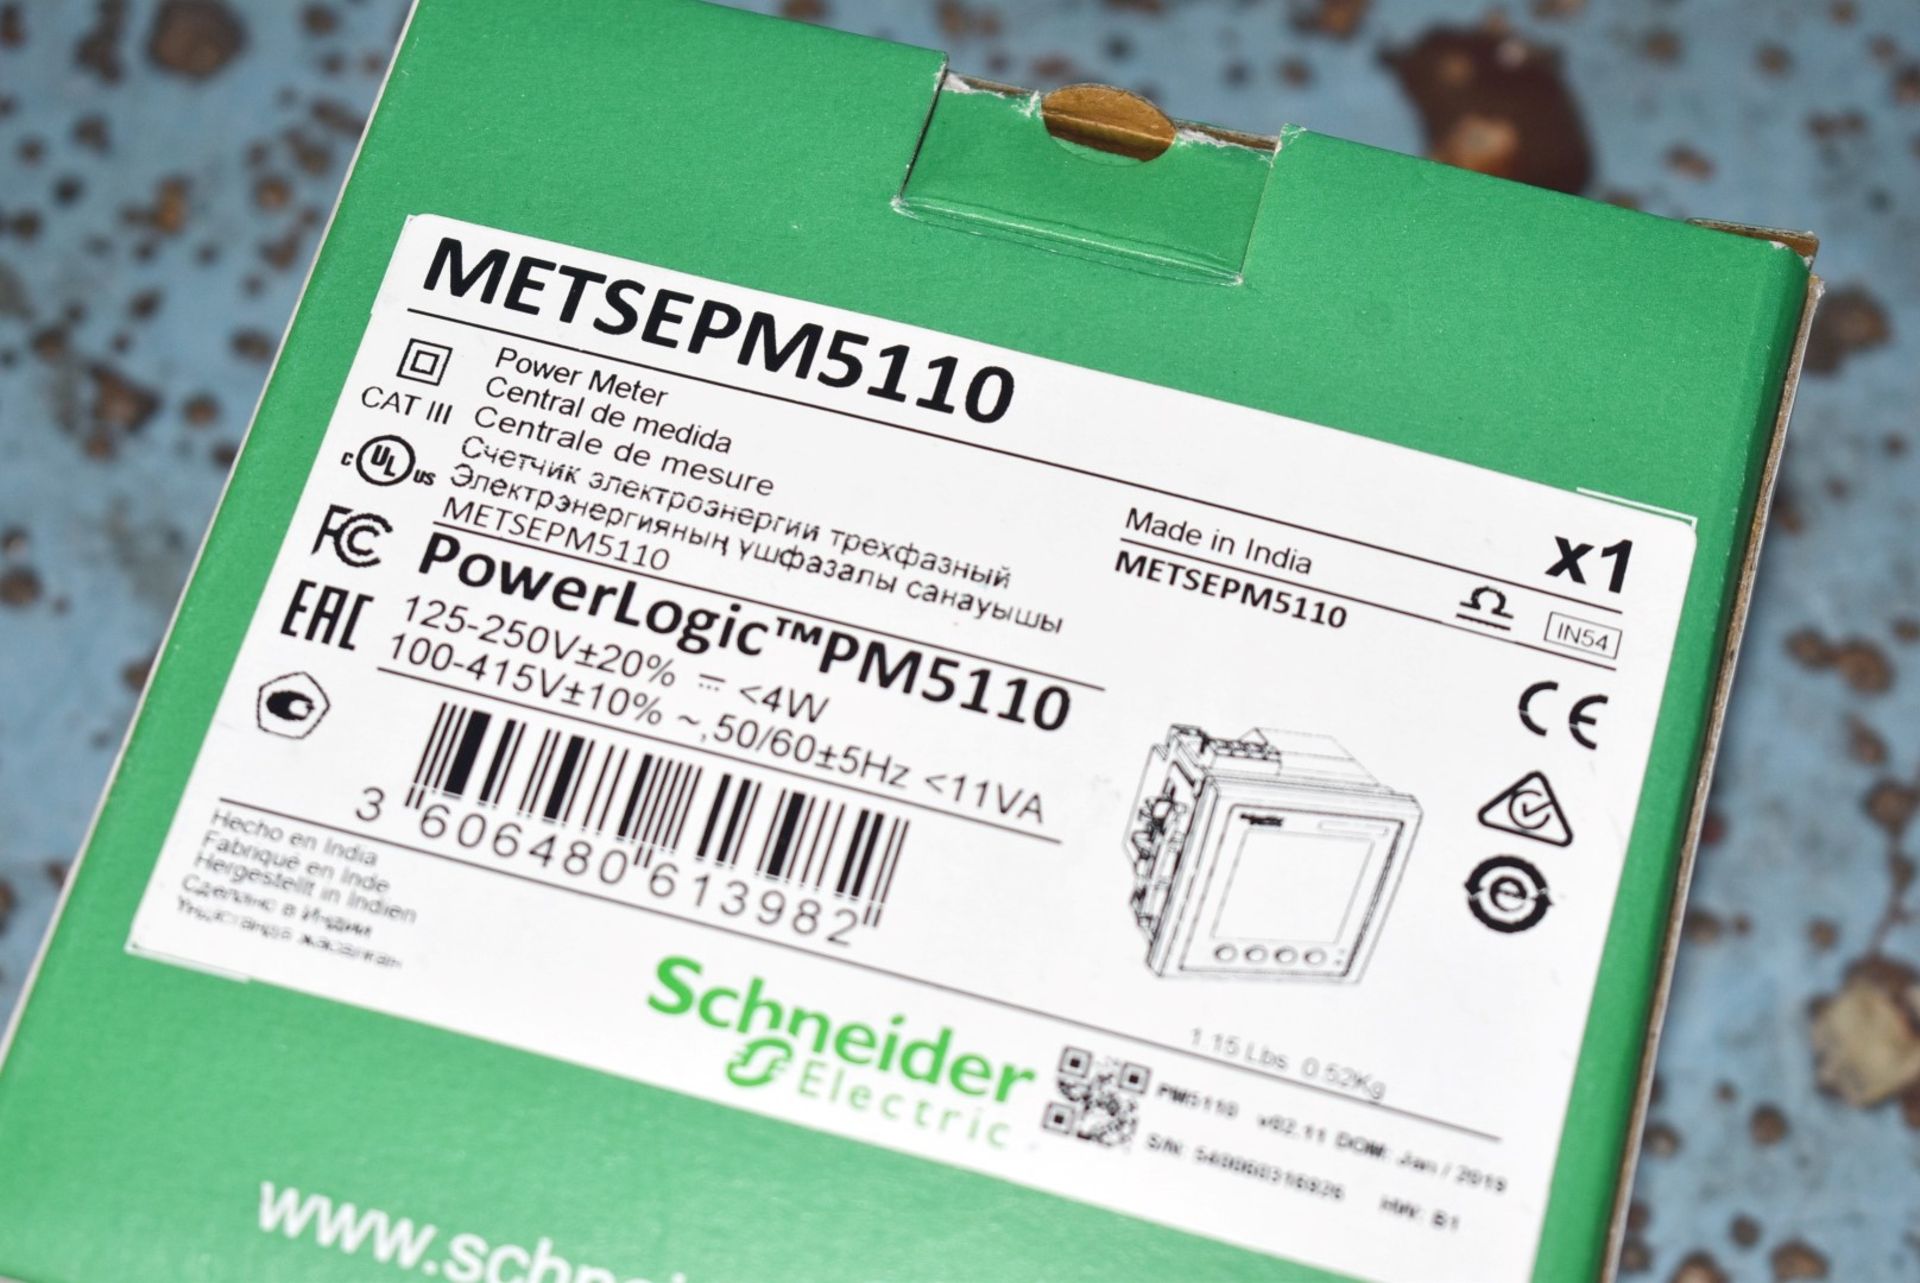 1 x Schneider Power Logic PM5110 Power Meter - Type METSEPM5110 - New & Boxed RRP £350 - Image 3 of 6